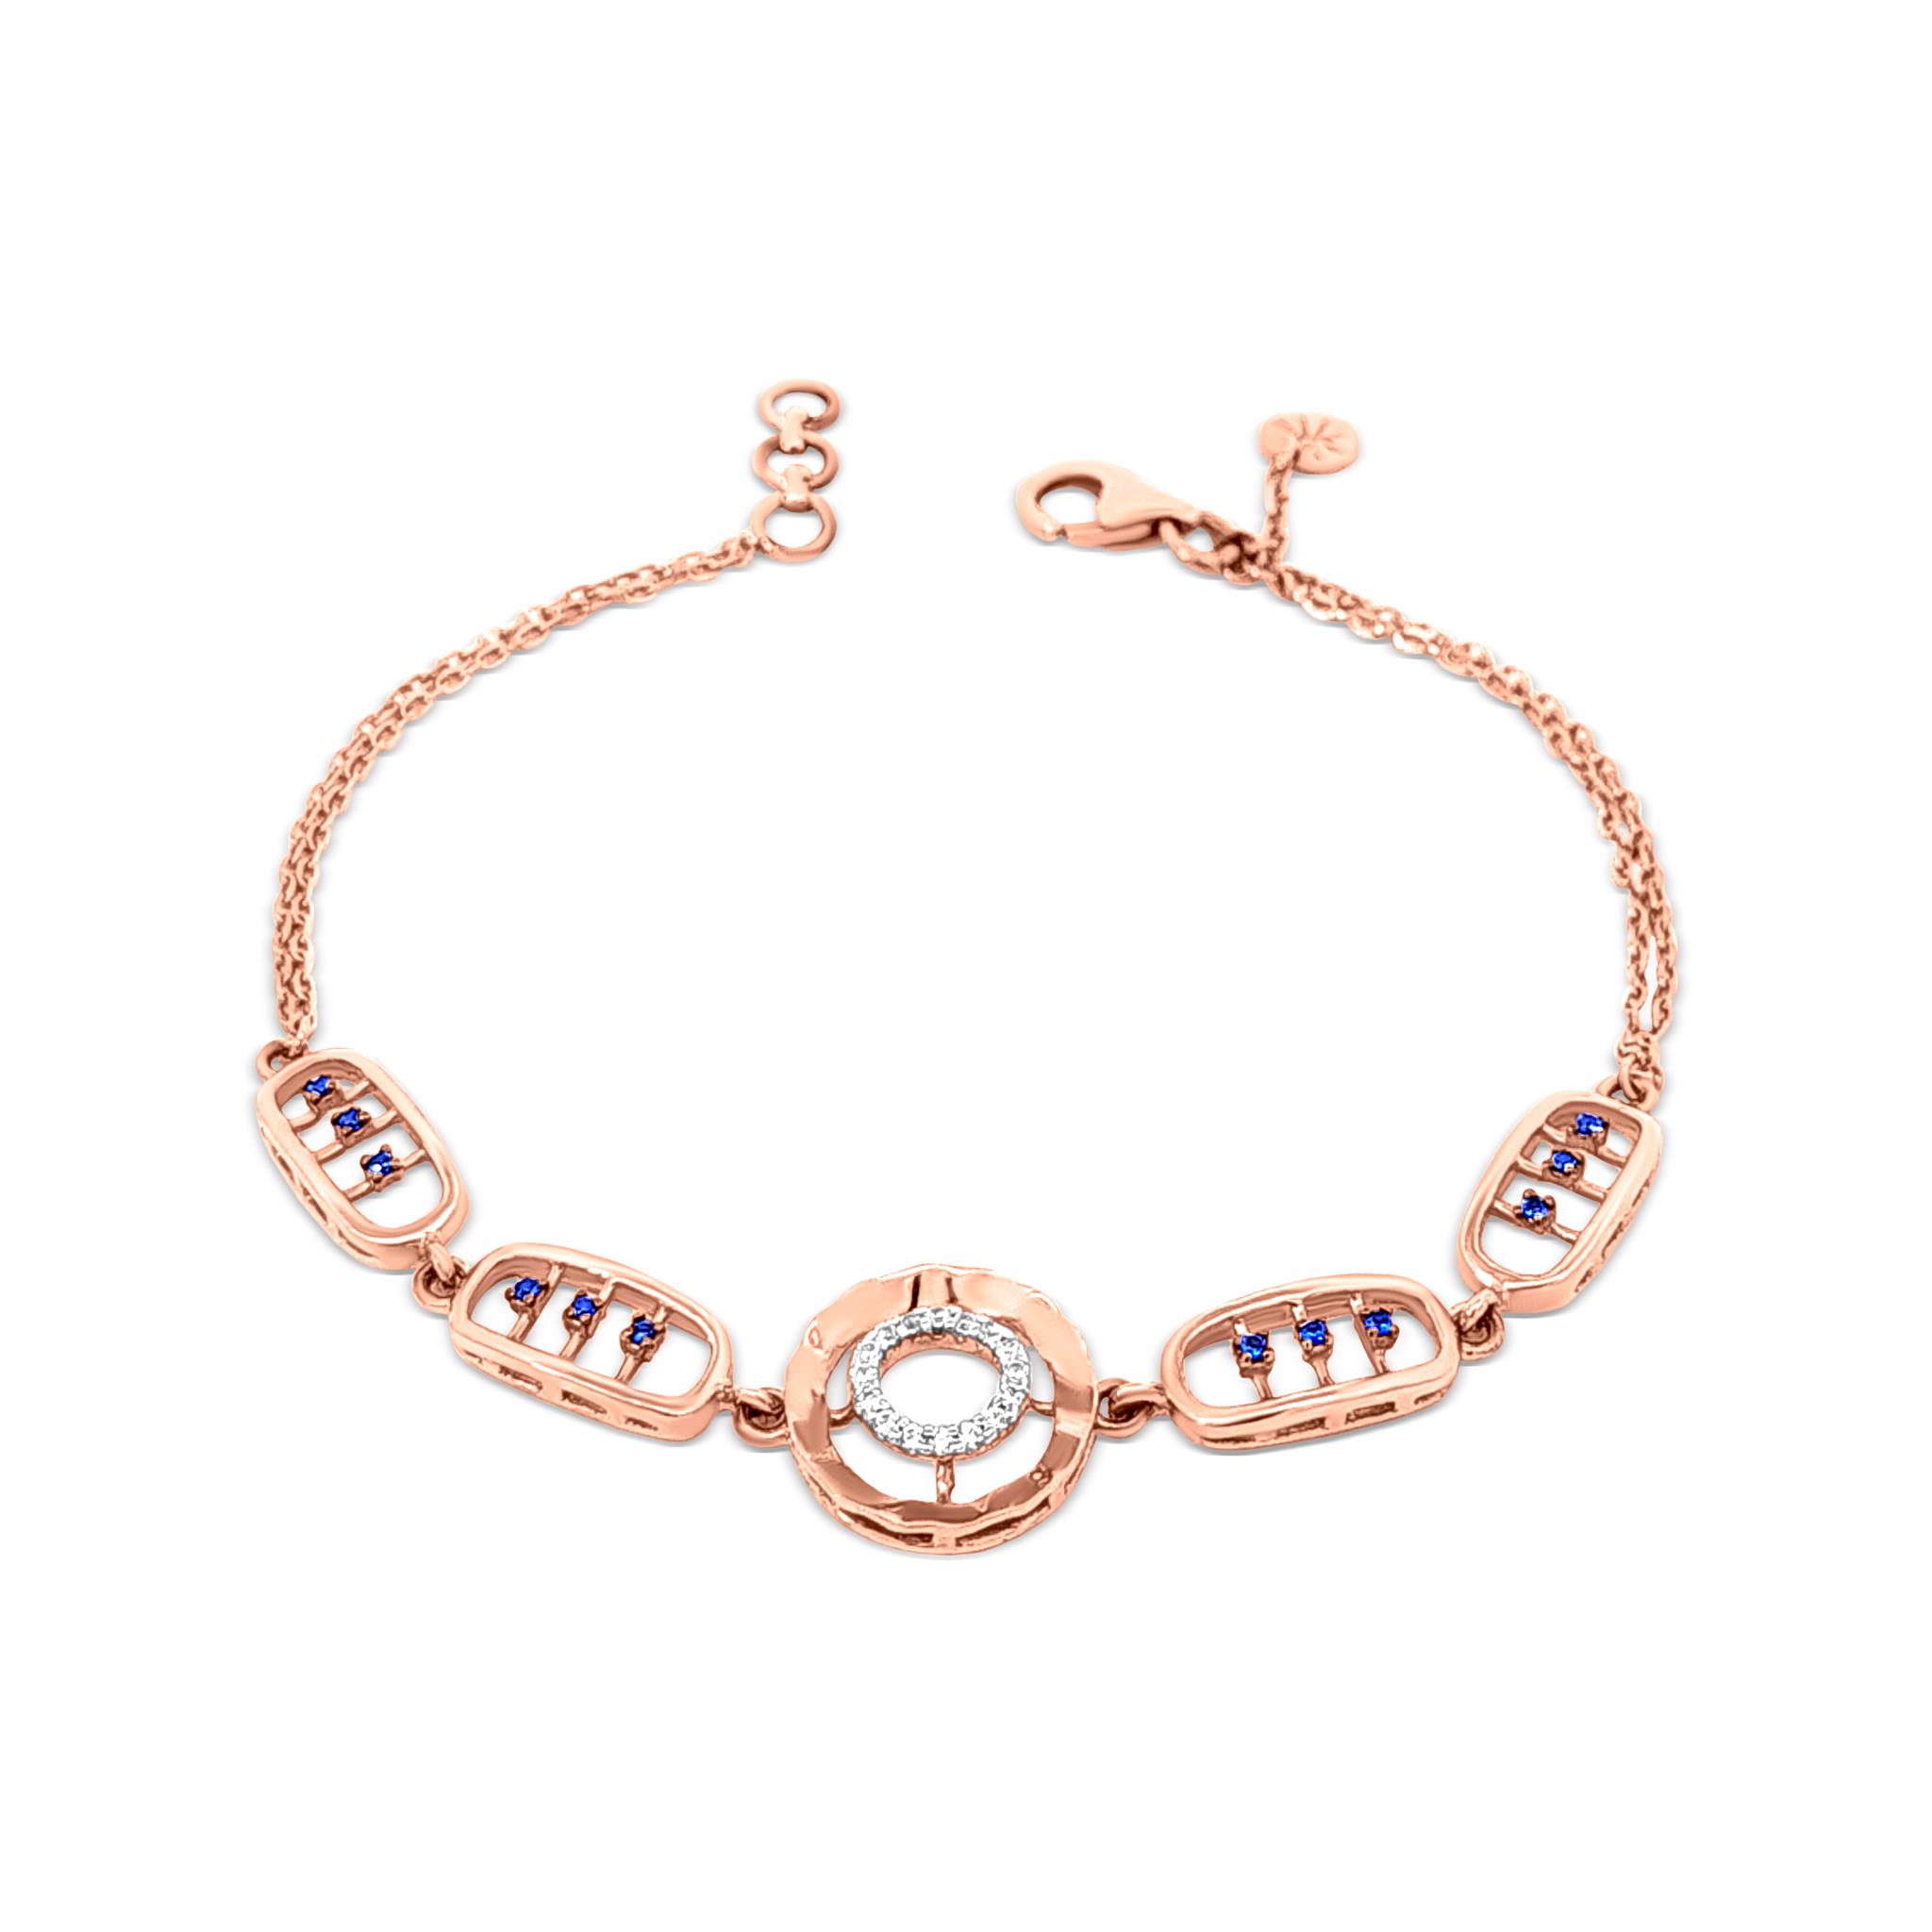 Gold Finish Men's Chain Bracelet: Gift/Send Jewellery Gifts Online  J11125283 |IGP.com | Mens chain bracelet, Chains for men, Chain bracelet